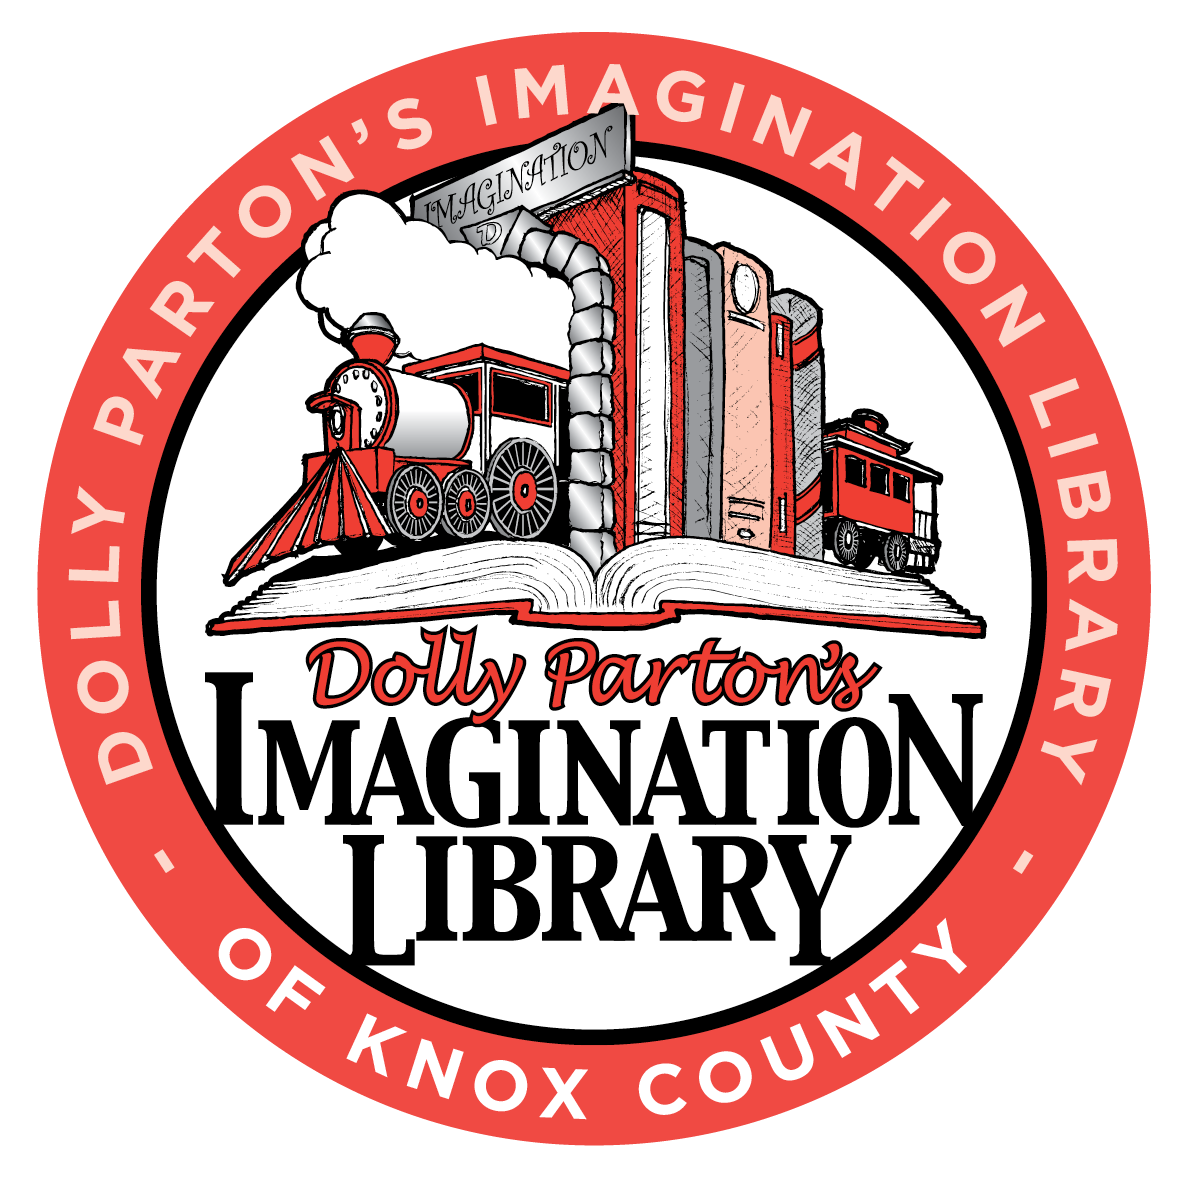 Dolly Parton's Imagination Library of Knox County logo